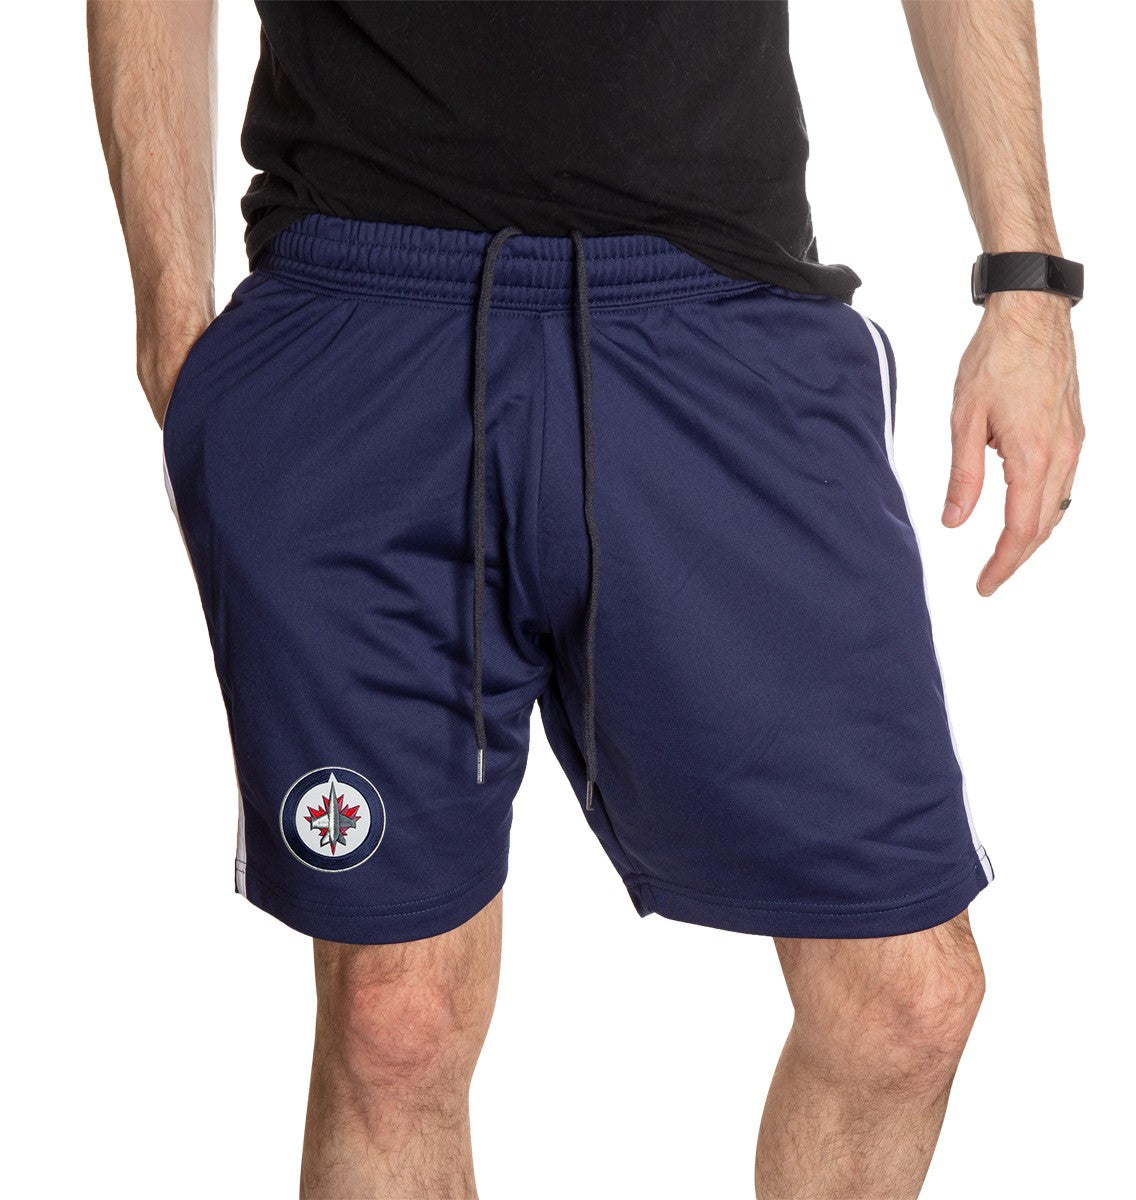 Winnipeg Jets Two-Stripe Shorts for Men